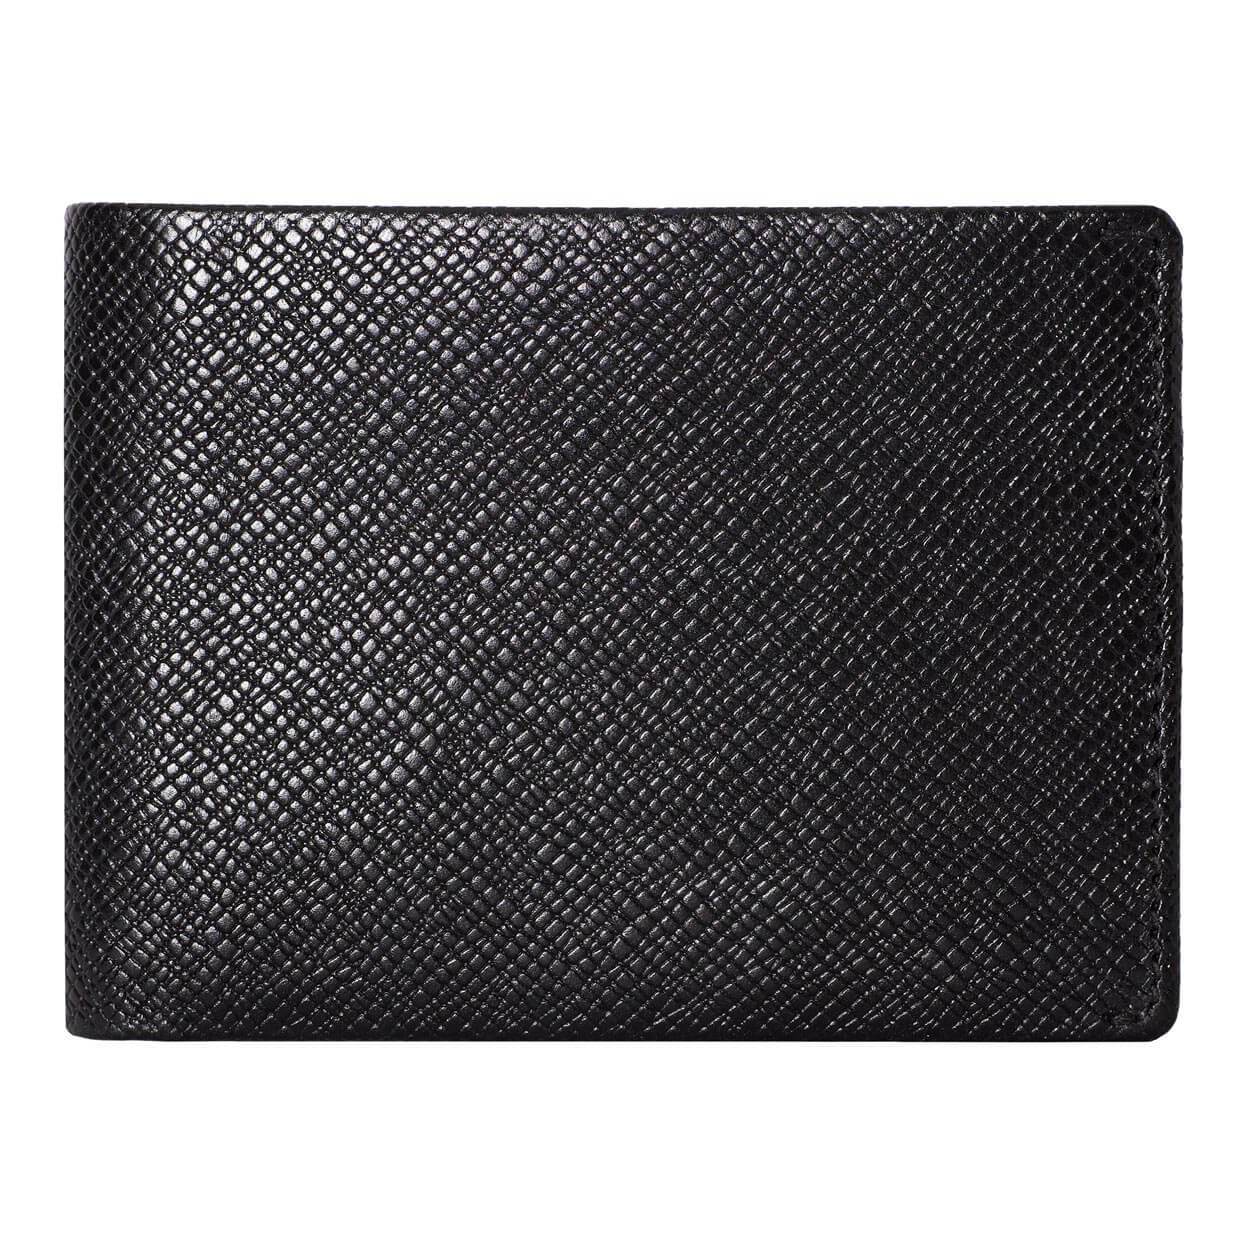 DiLoro Men's Slim Bifold Leather Wallet 2 ID Windows Black Saffiano - Front View